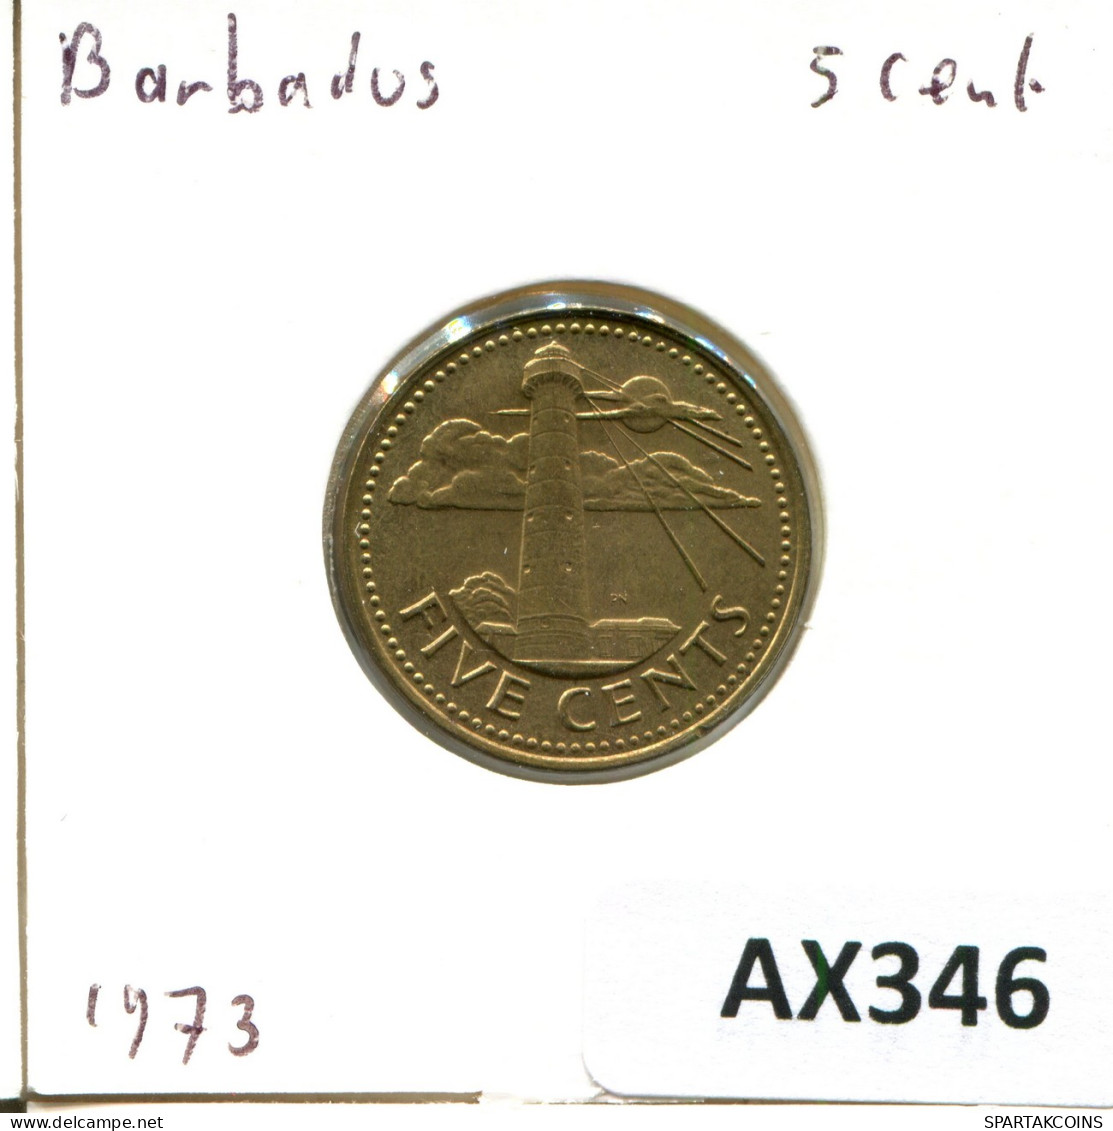 5 CENTS 1973 BARBADOS Moneda #AX346.E - Barbados